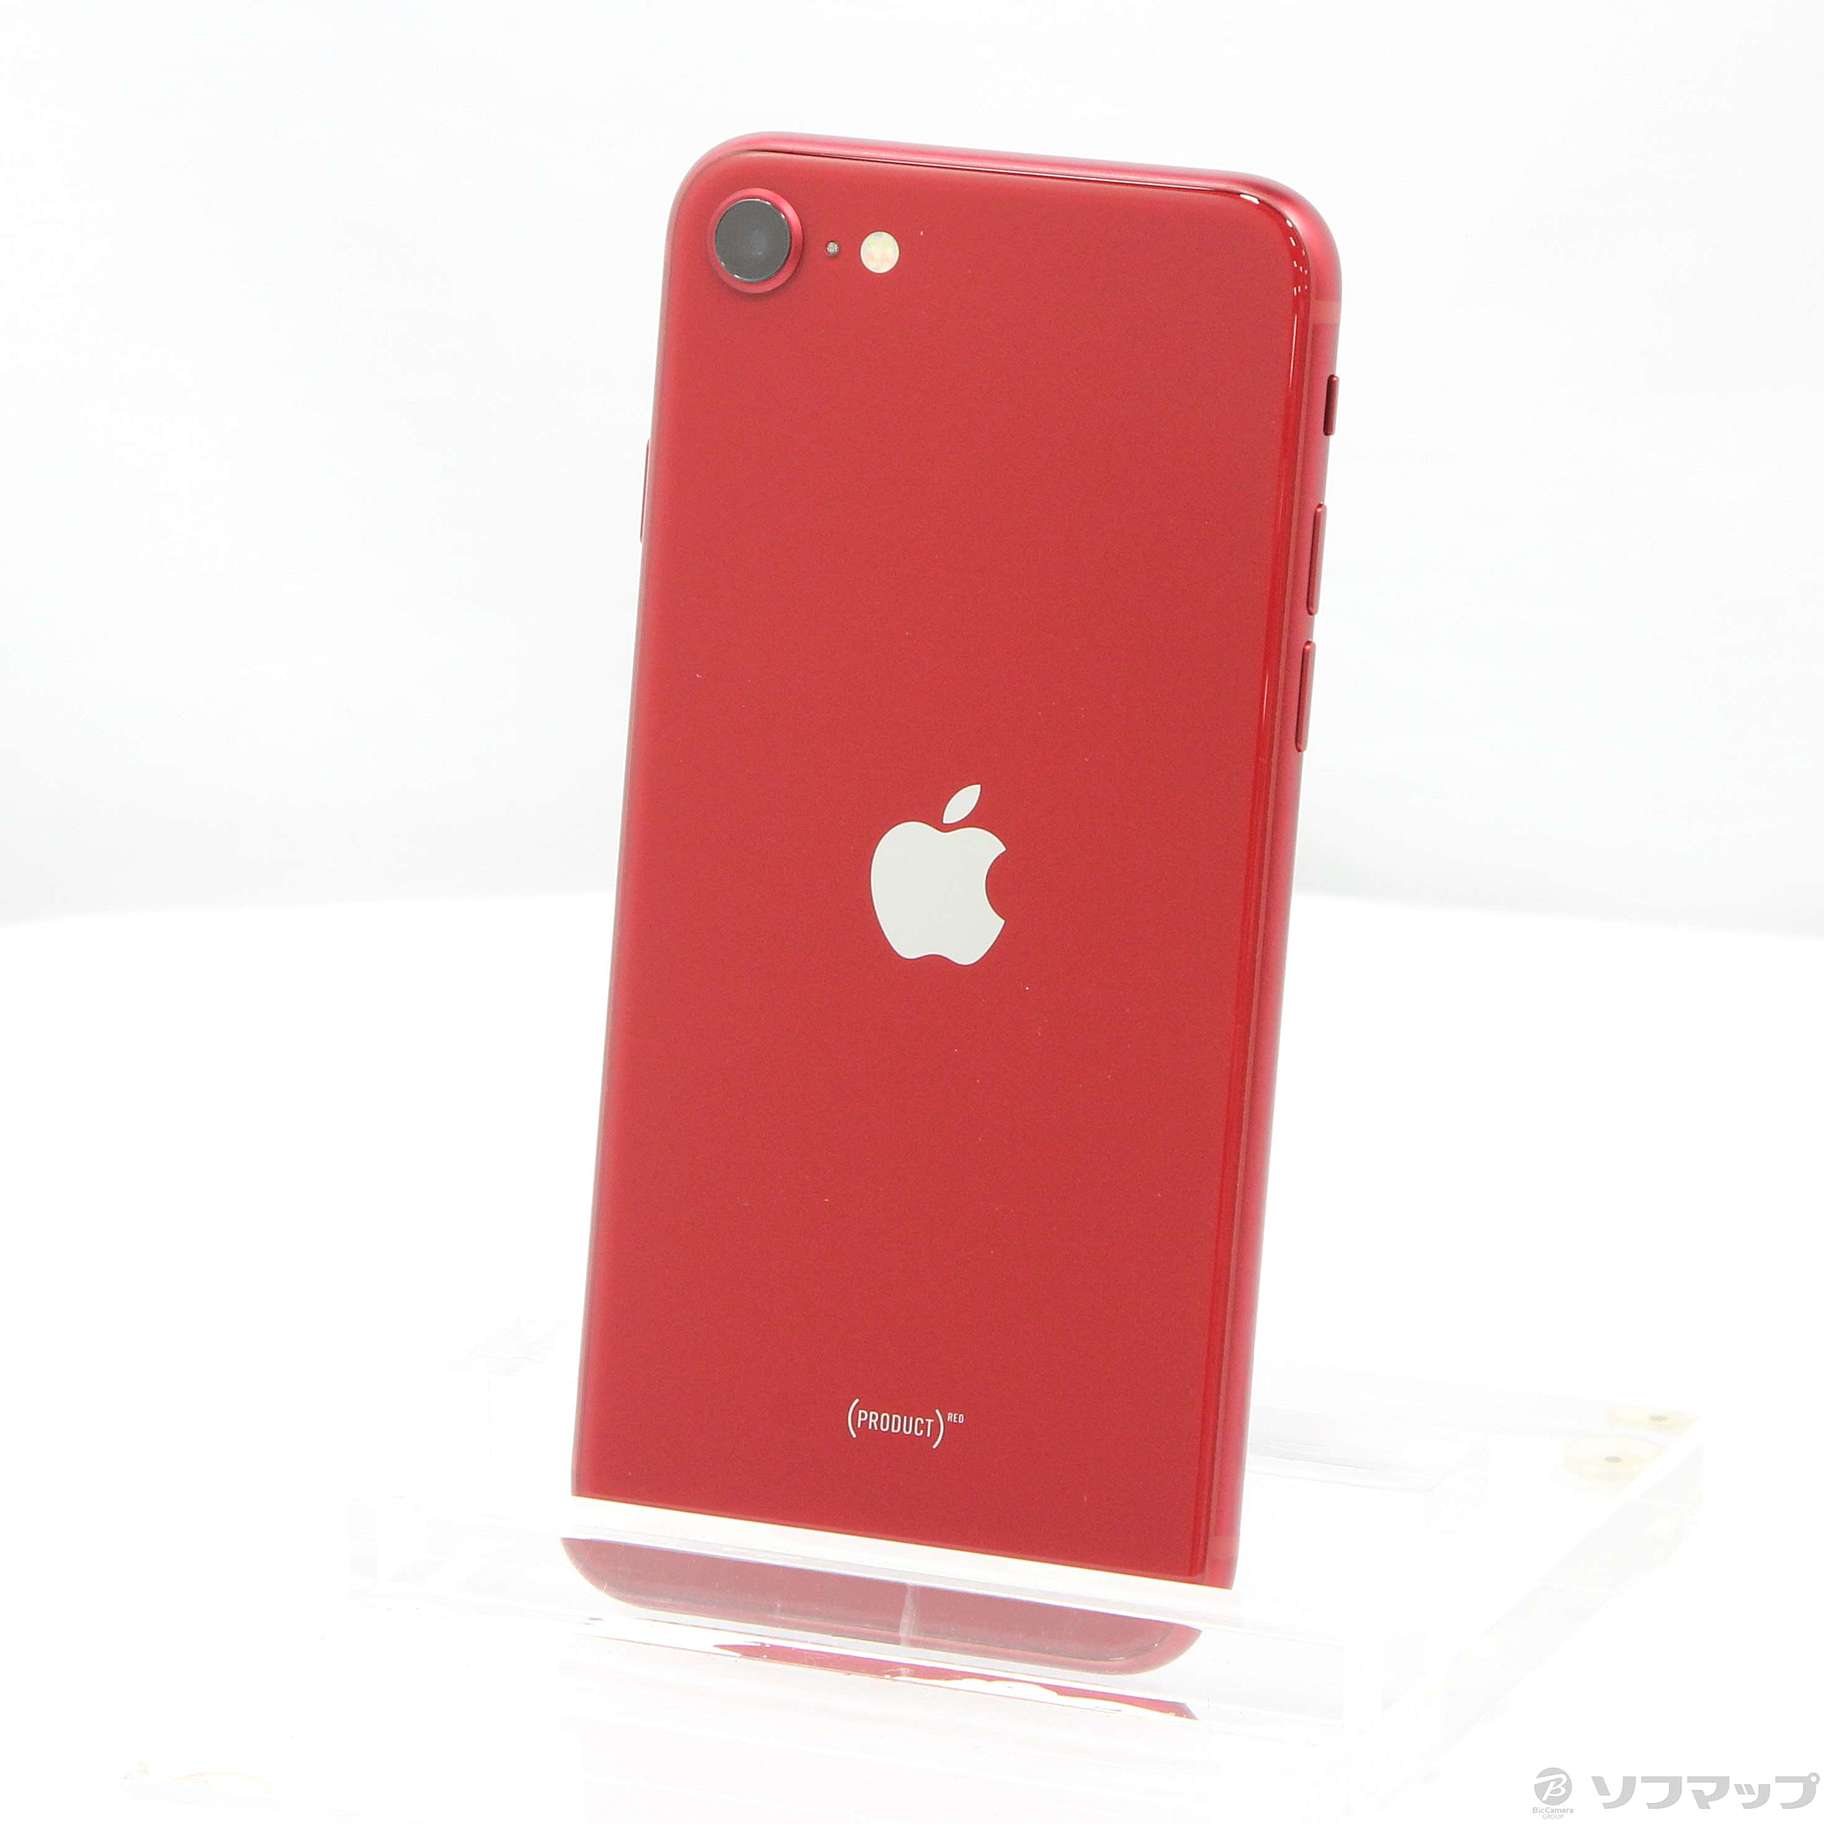 Apple代表カラーiPhone SE 第三世代 128GB product RED ...